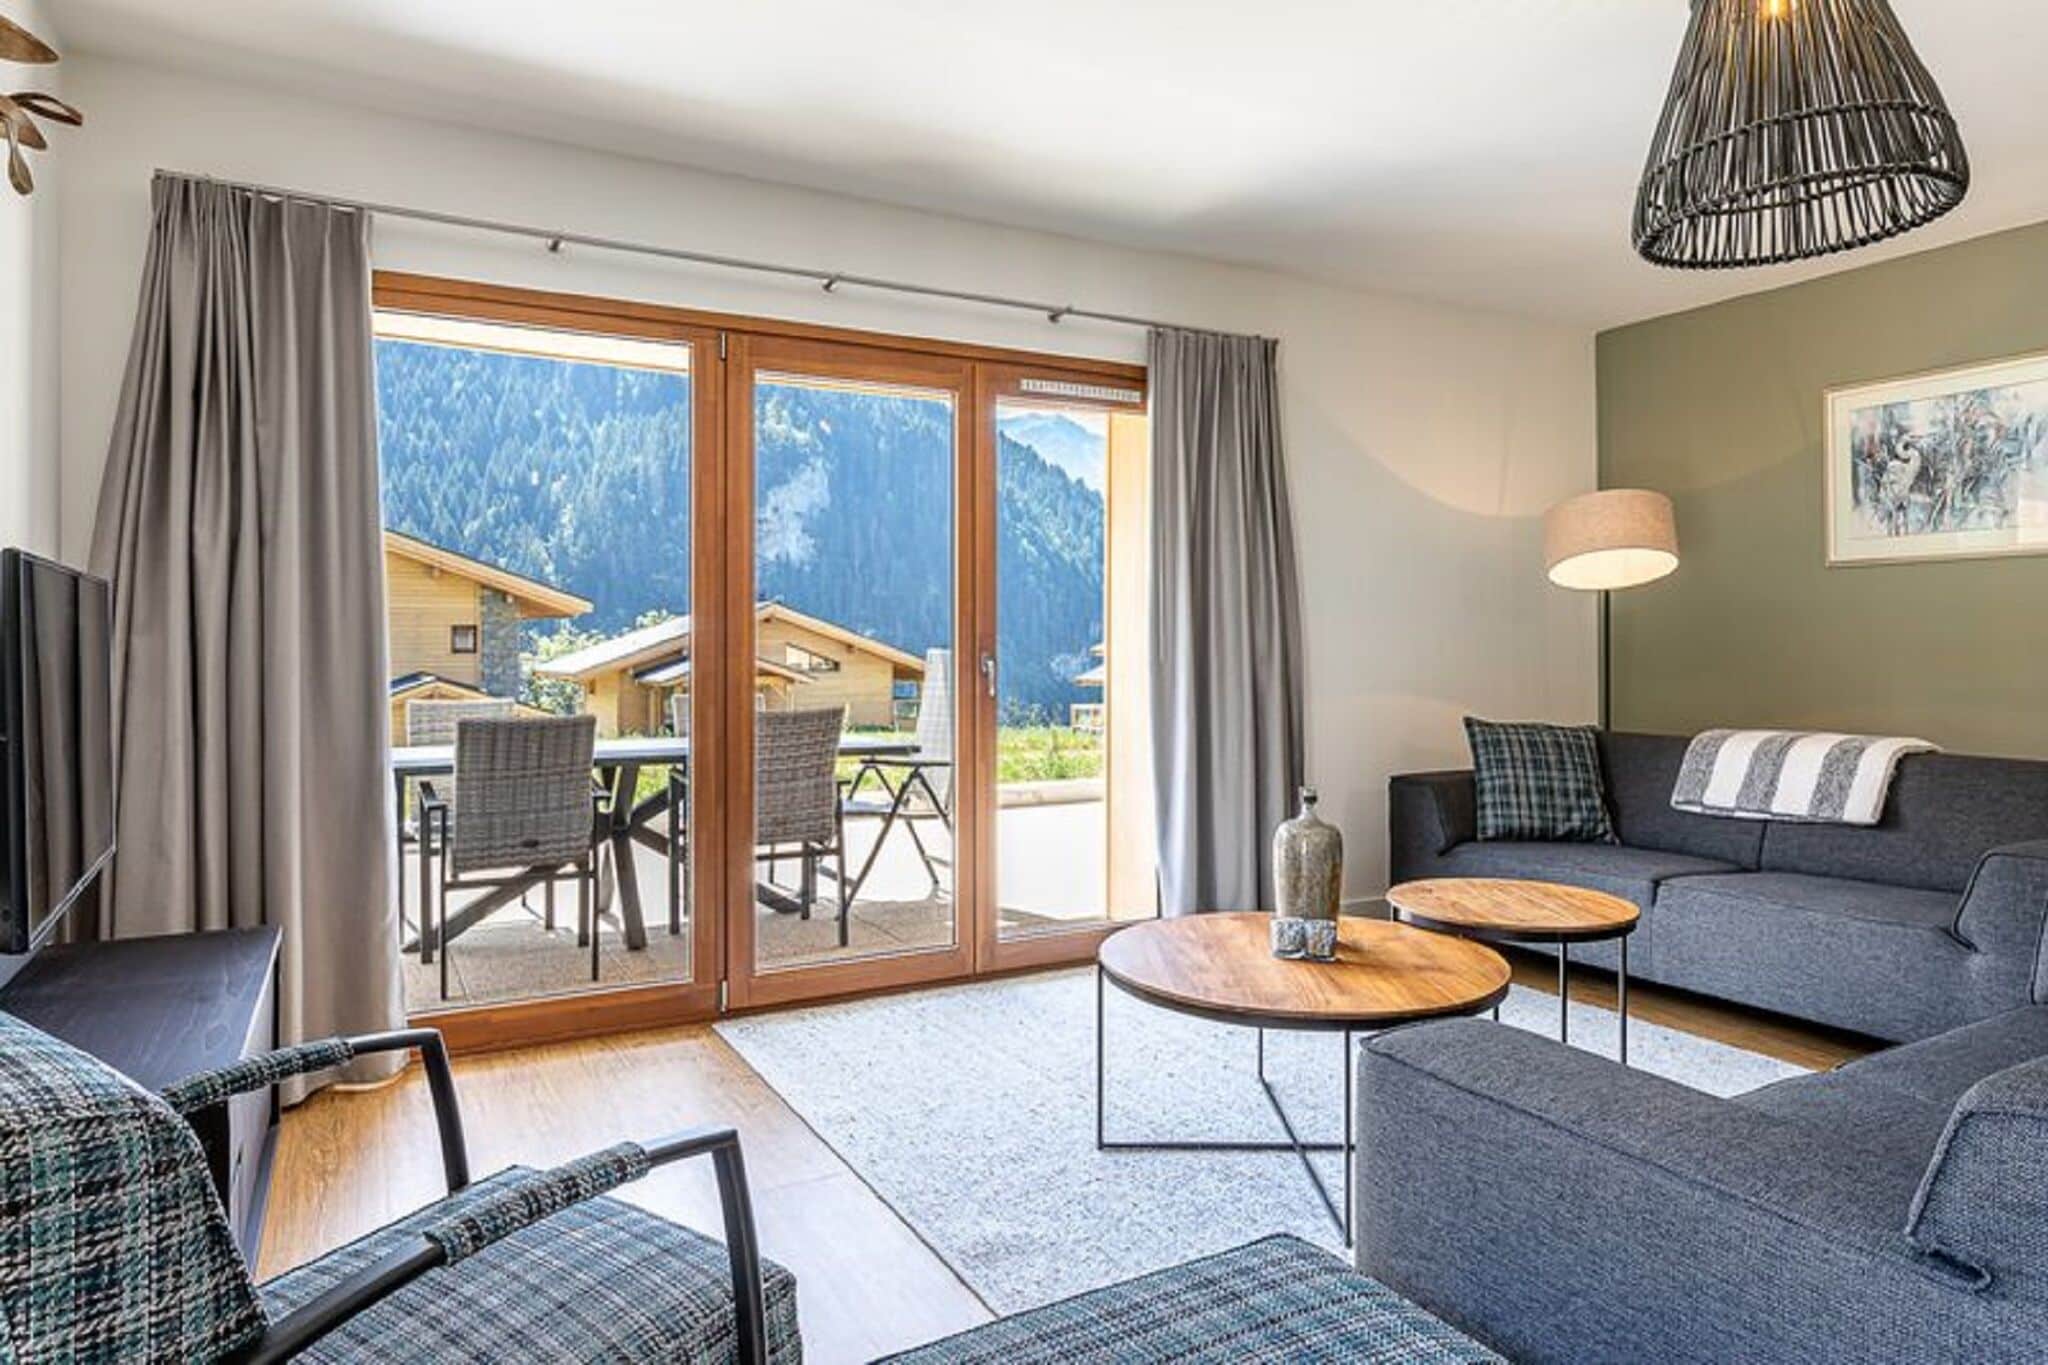 Luxurious apartment with balcony, ski lift 1.5 km away.